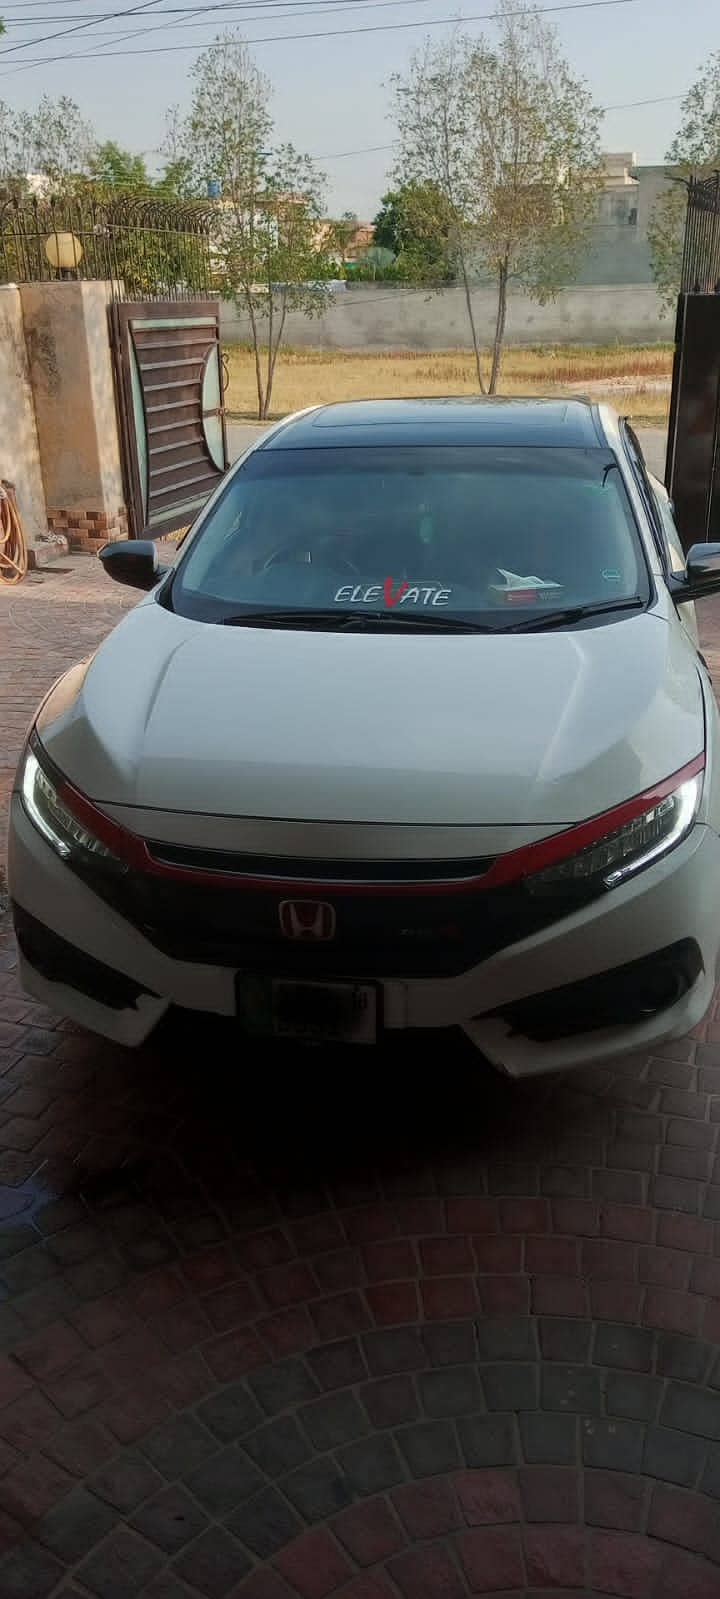 2018 Honda Civic UG 39k miles automatic transmission 2